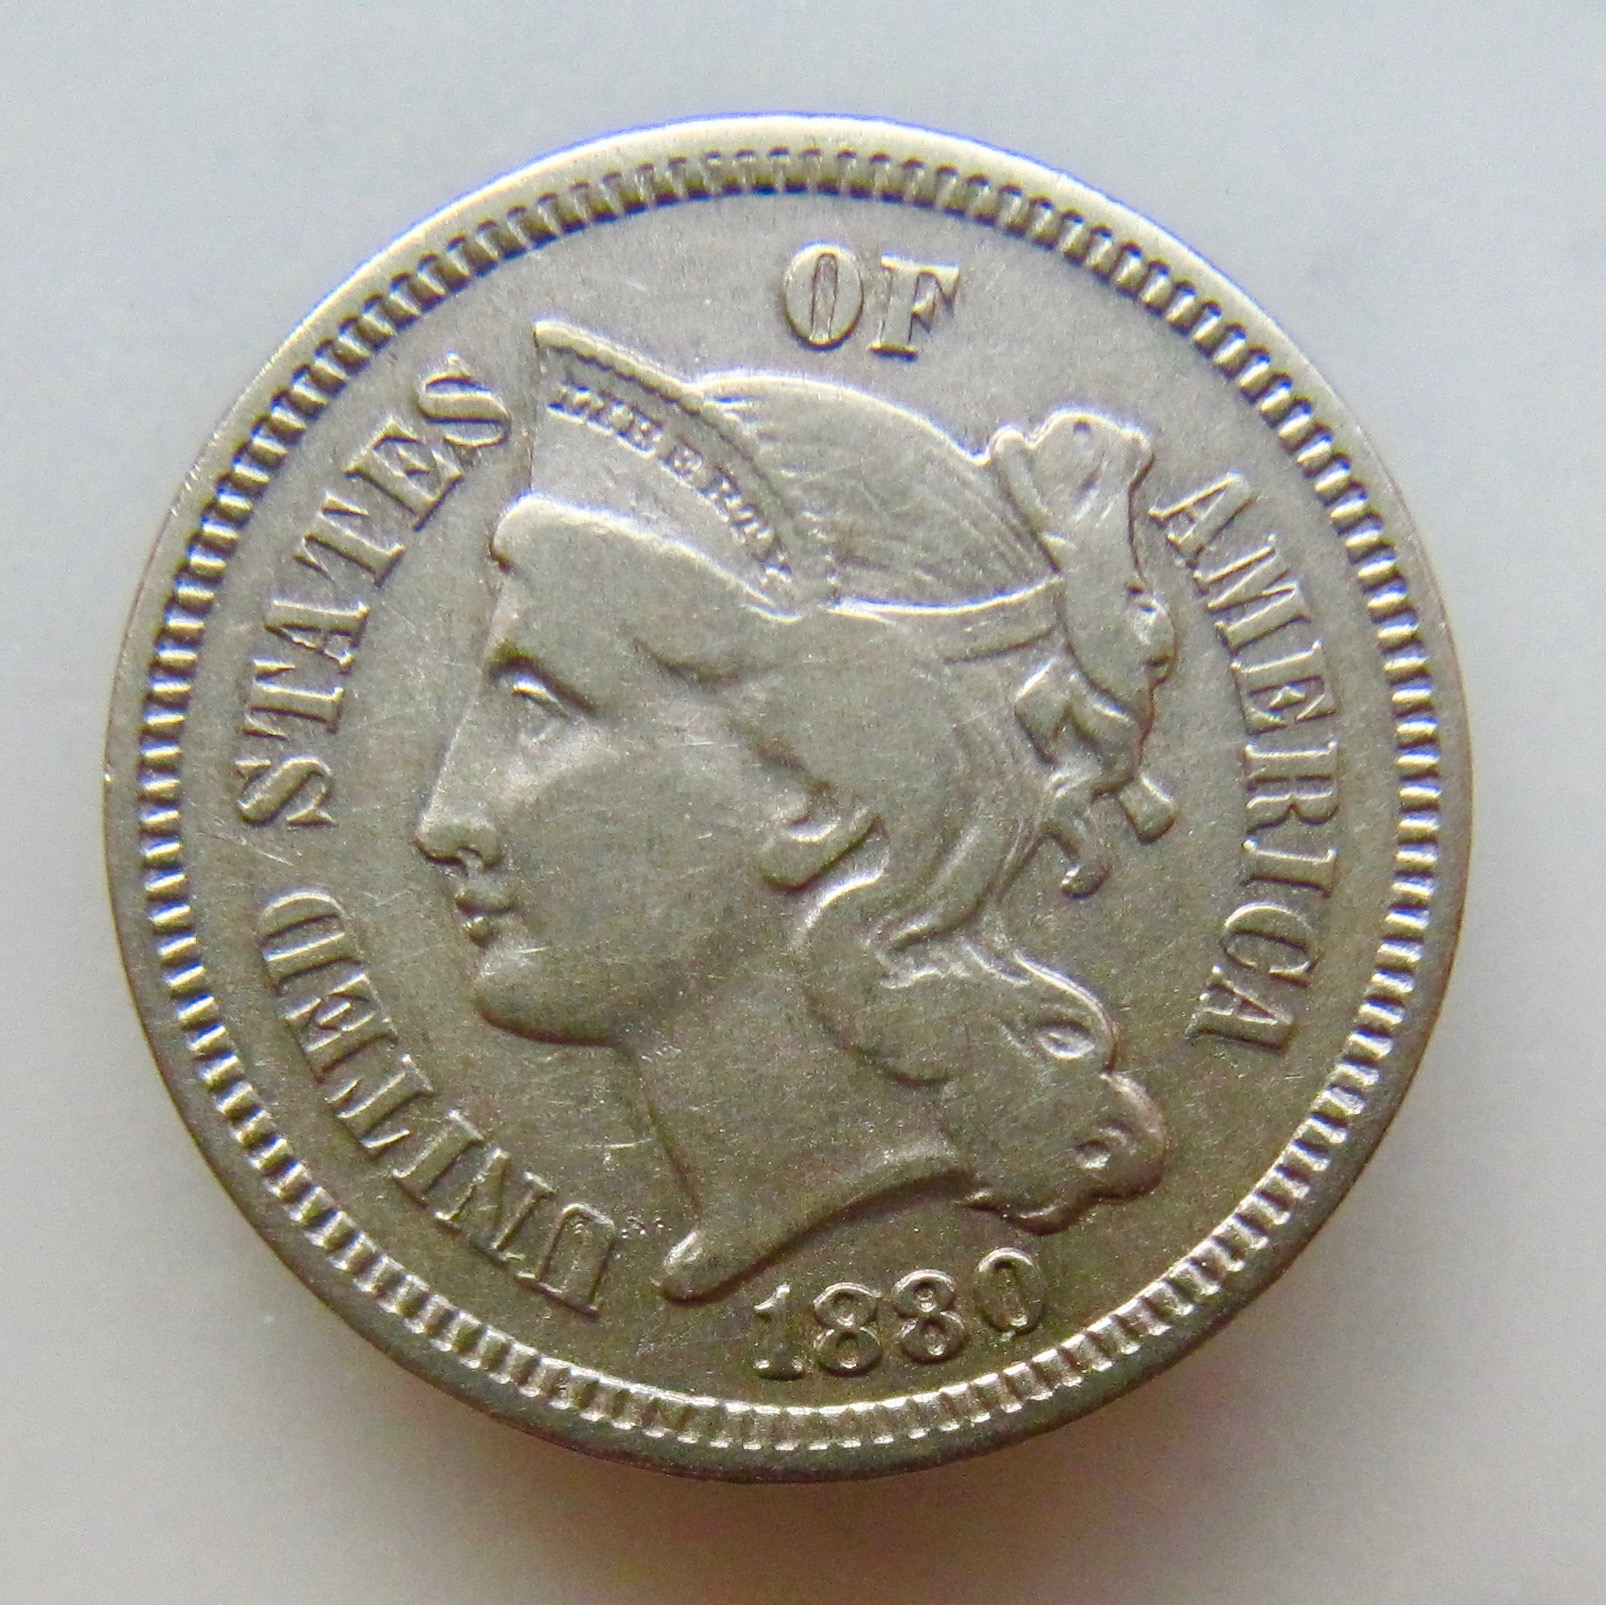 1880 3 cent nickel obverse1 N  - 1.jpg